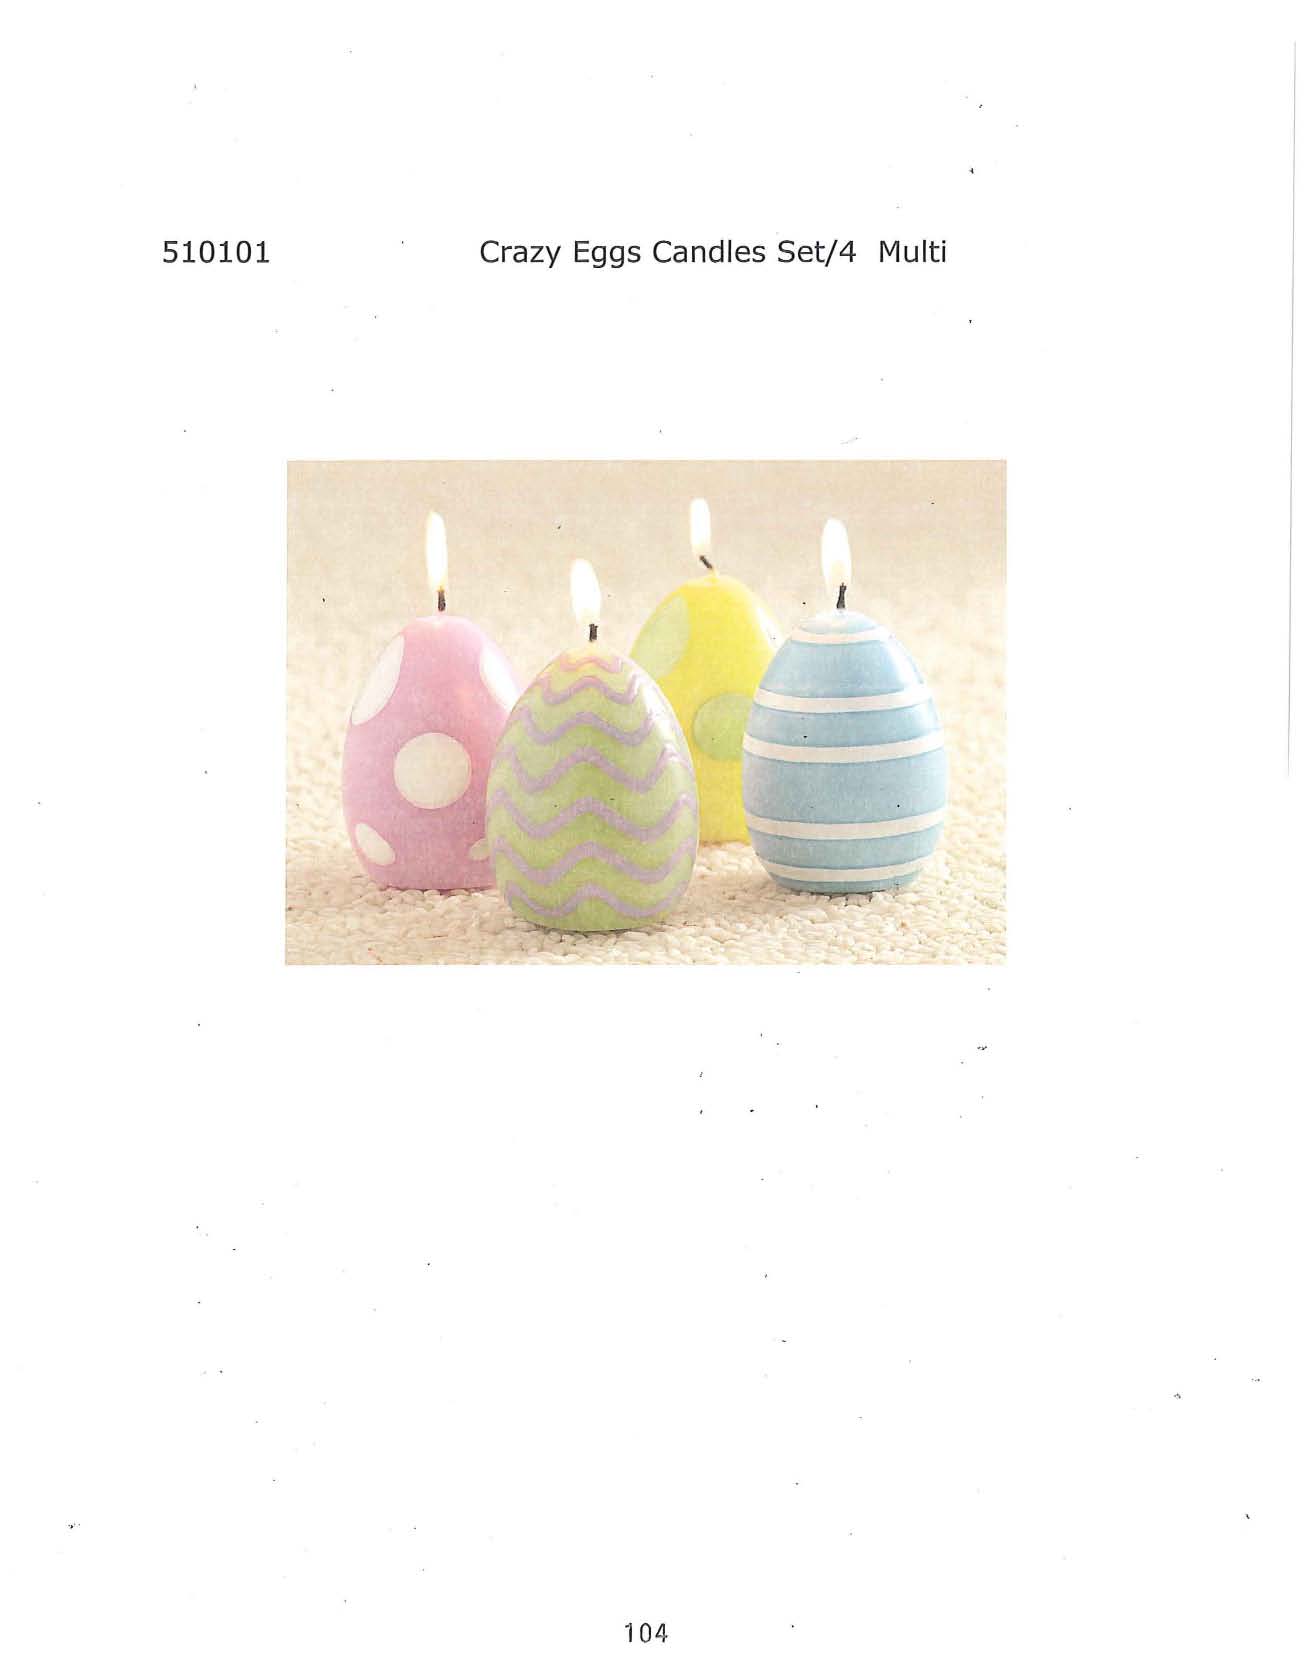 Crazy Egg Candle set/4 - Multi